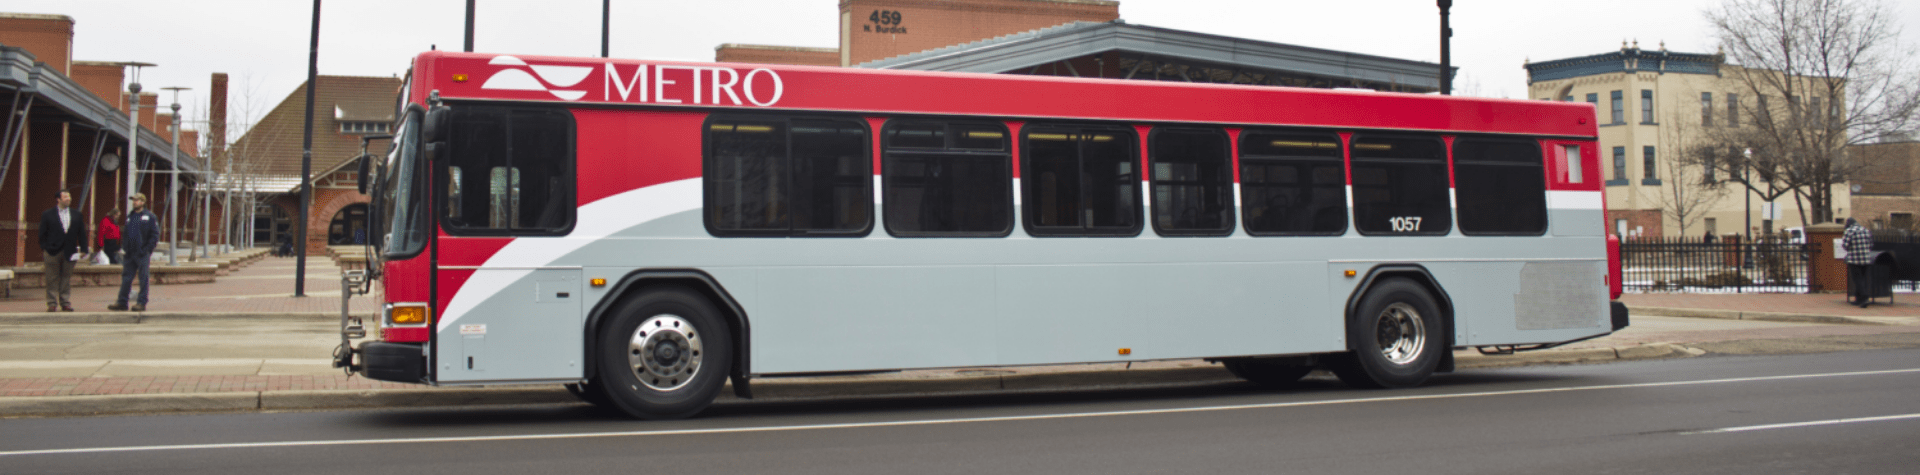 An image of a Kalamazoo Metro bus at the Kalamazoo Transportation Center.